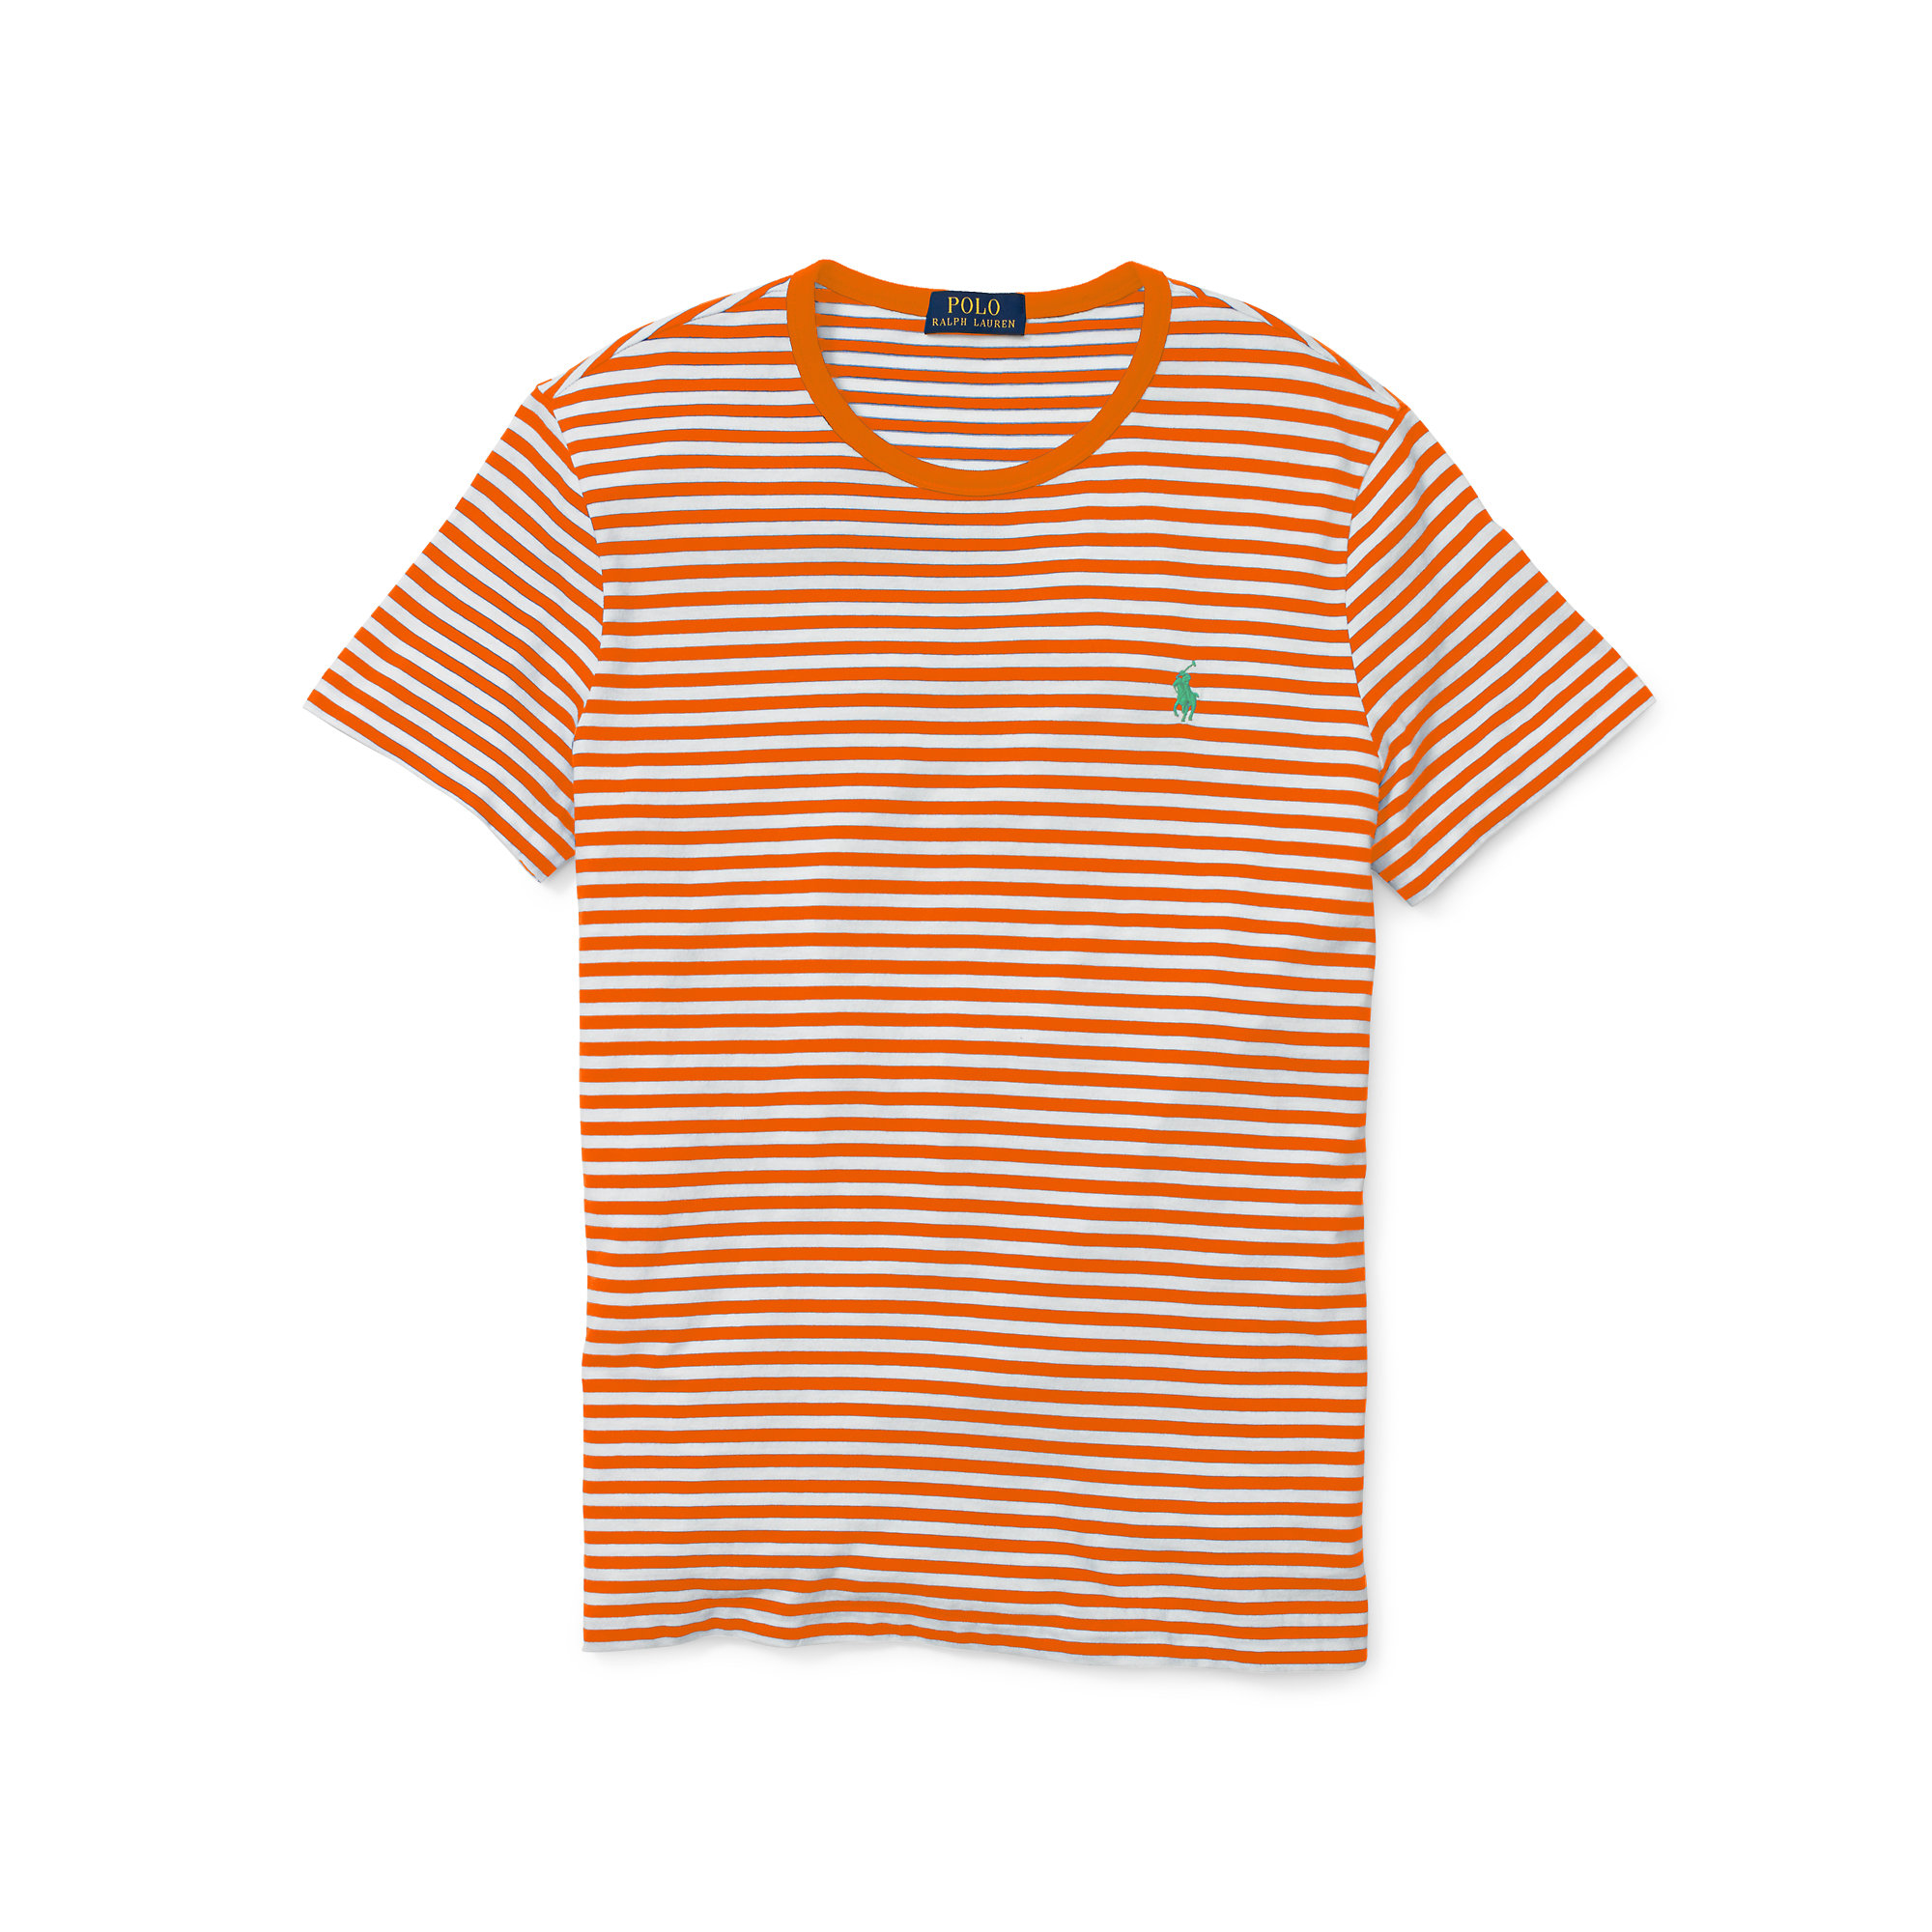 Polo Ralph Lauren Striped Cotton Jersey T-shirt in Bright Orange/White  (Orange) for Men - Lyst